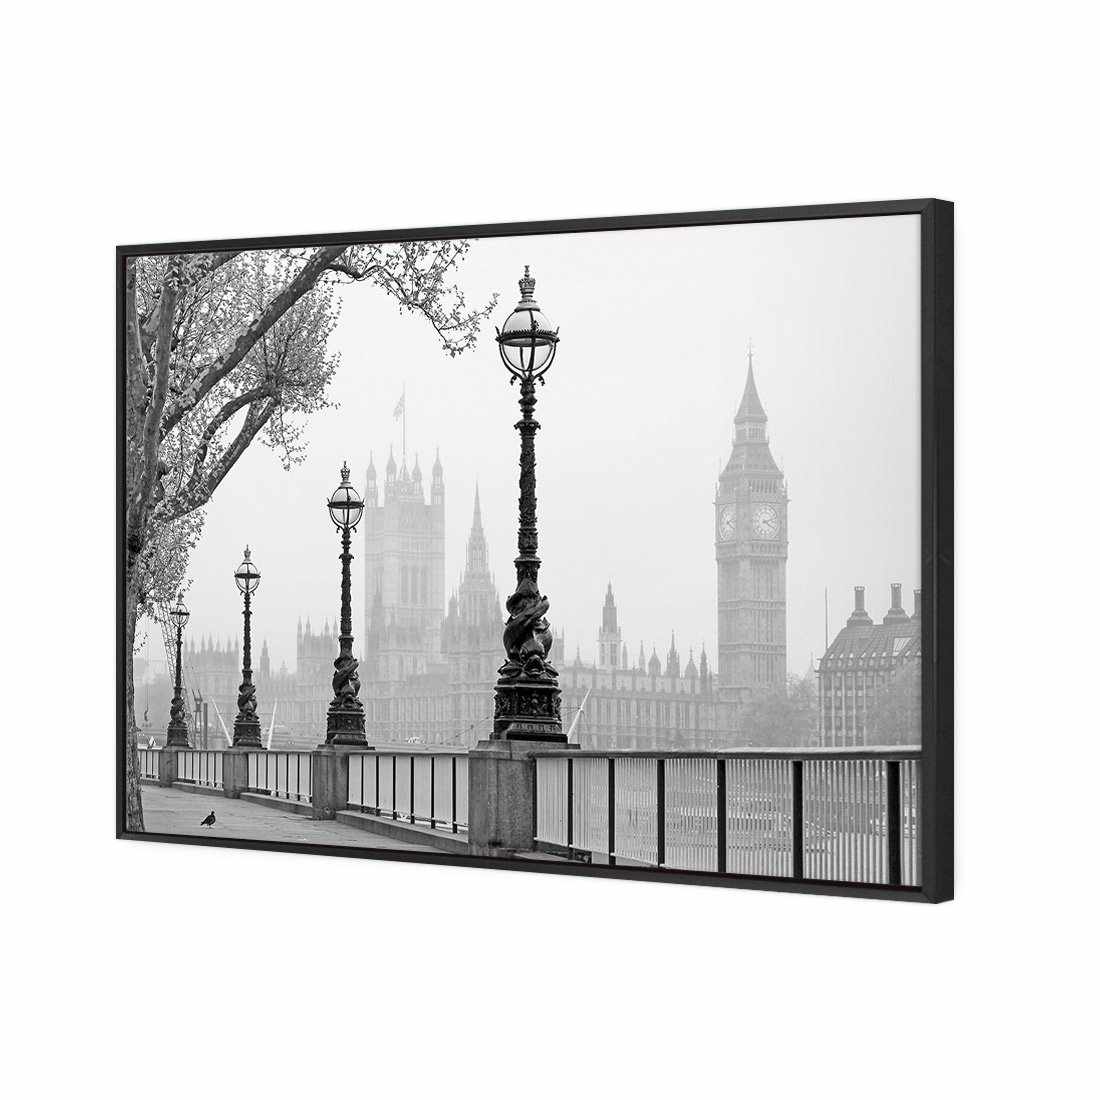 Misty London, B&W Canvas Art-Canvas-Wall Art Designs-45x30cm-Canvas - Black Frame-Wall Art Designs